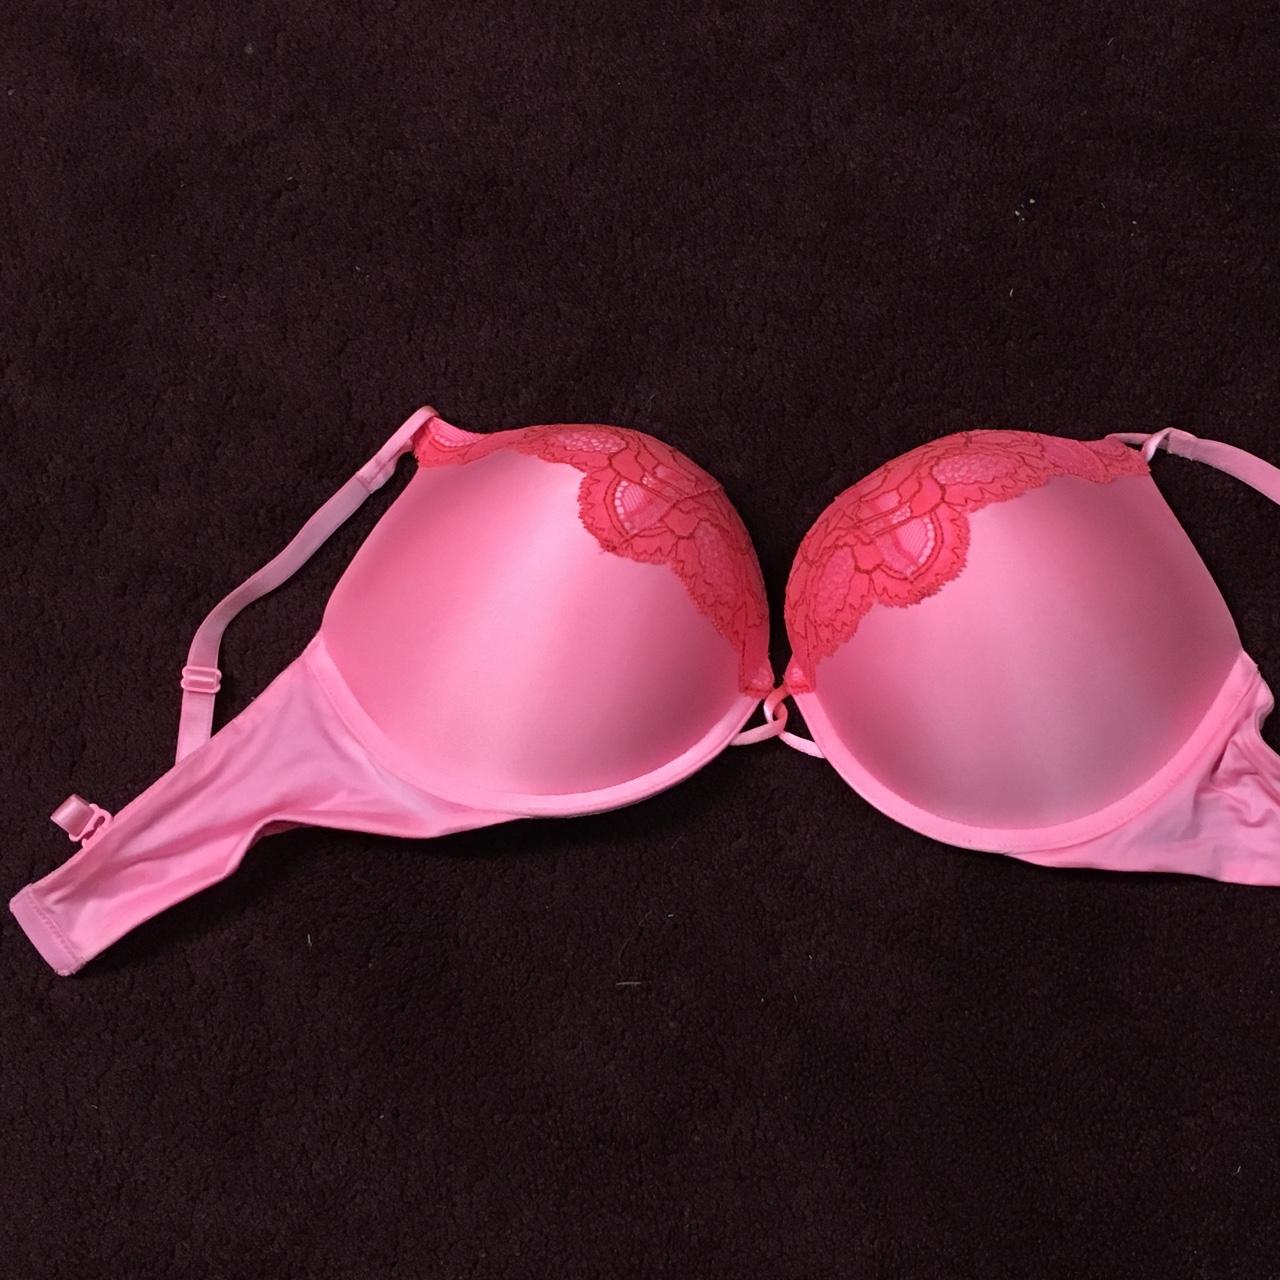 Victoria's Secret Bombshell Bra Pink Size 36 B - $49 (38% Off